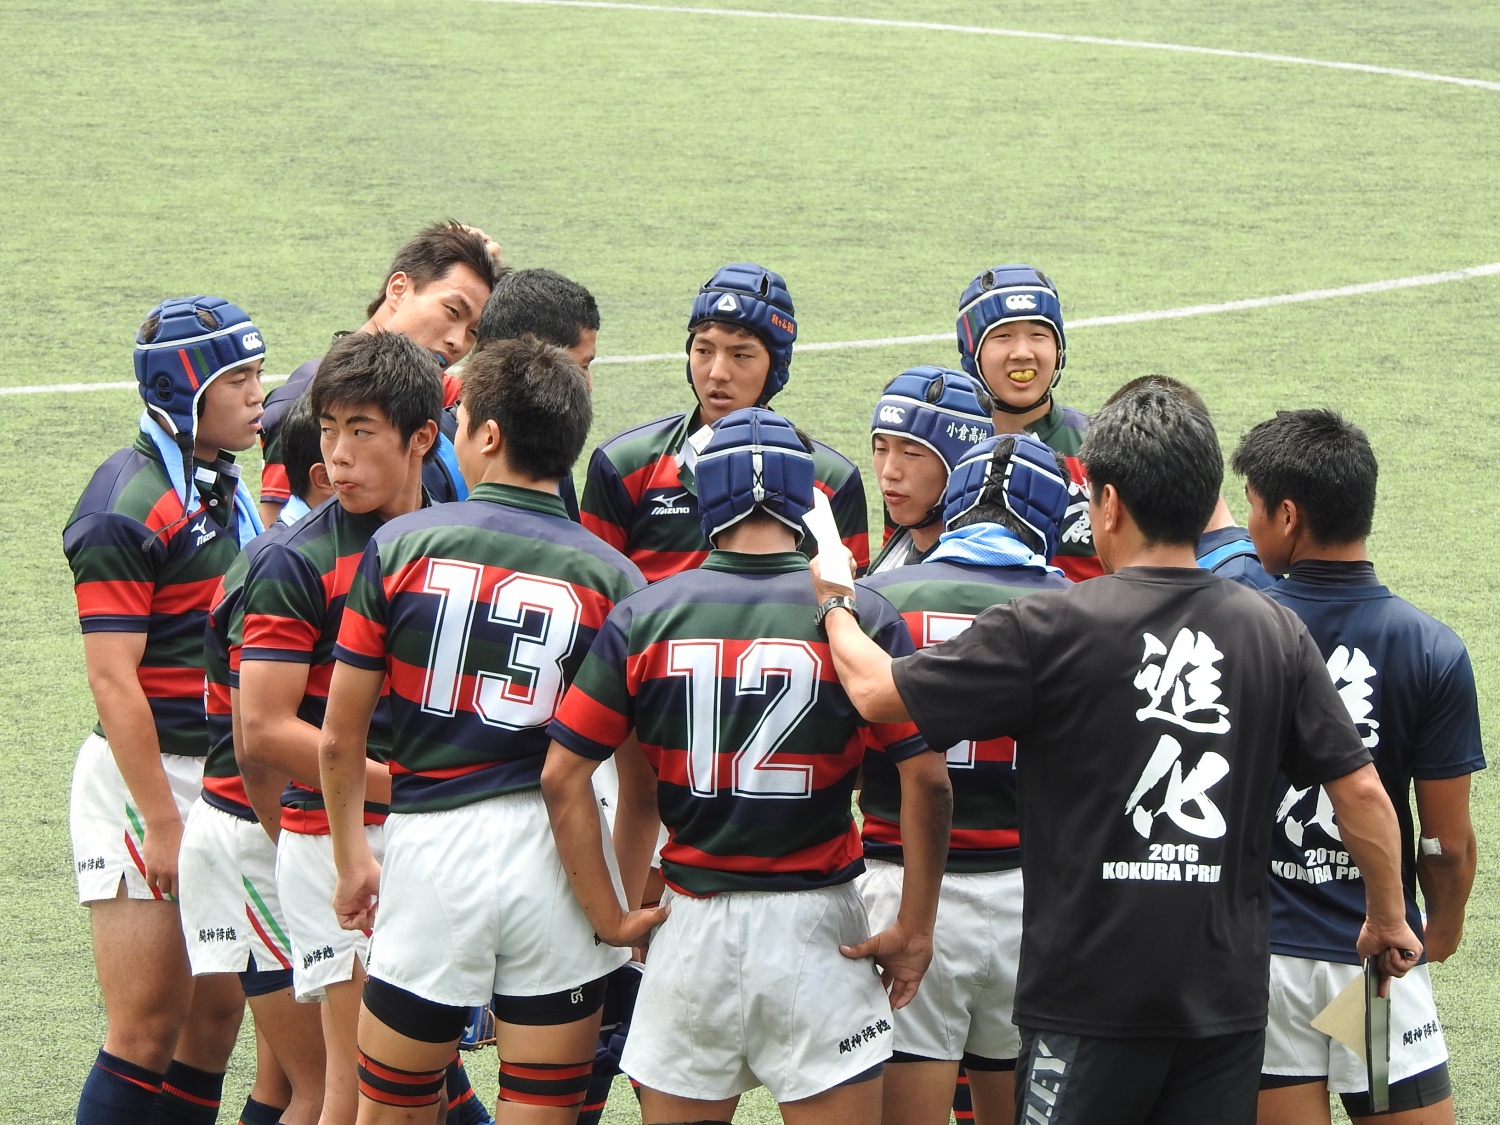 http://kokura-rugby.sakura.ne.jp/DSCN7176_xlarge.JPG